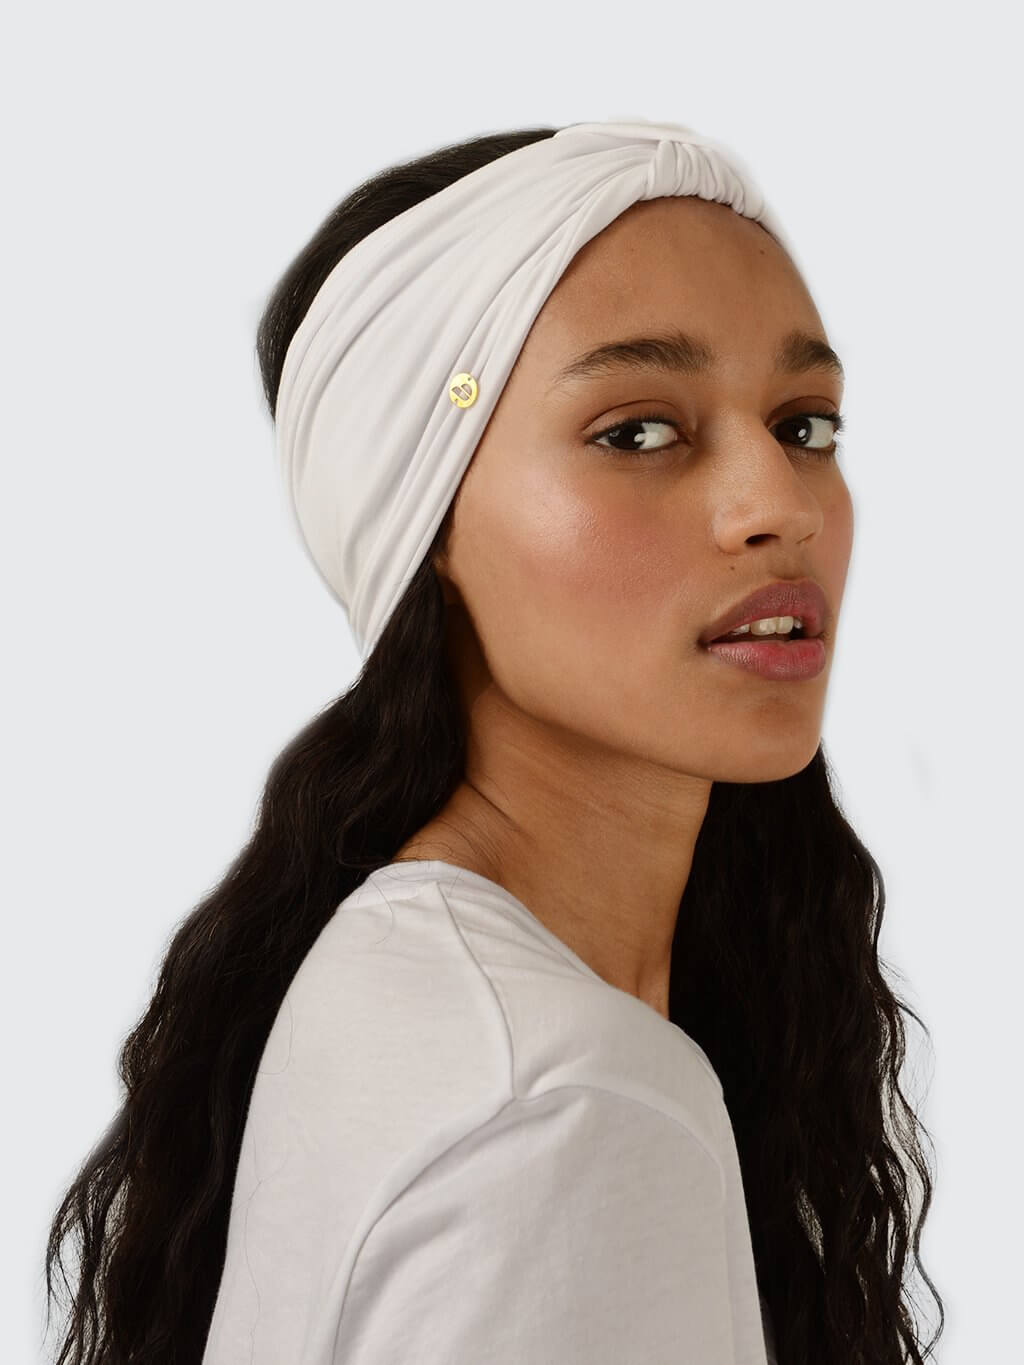 BLOM Original headband for women in Bright White. Multi style